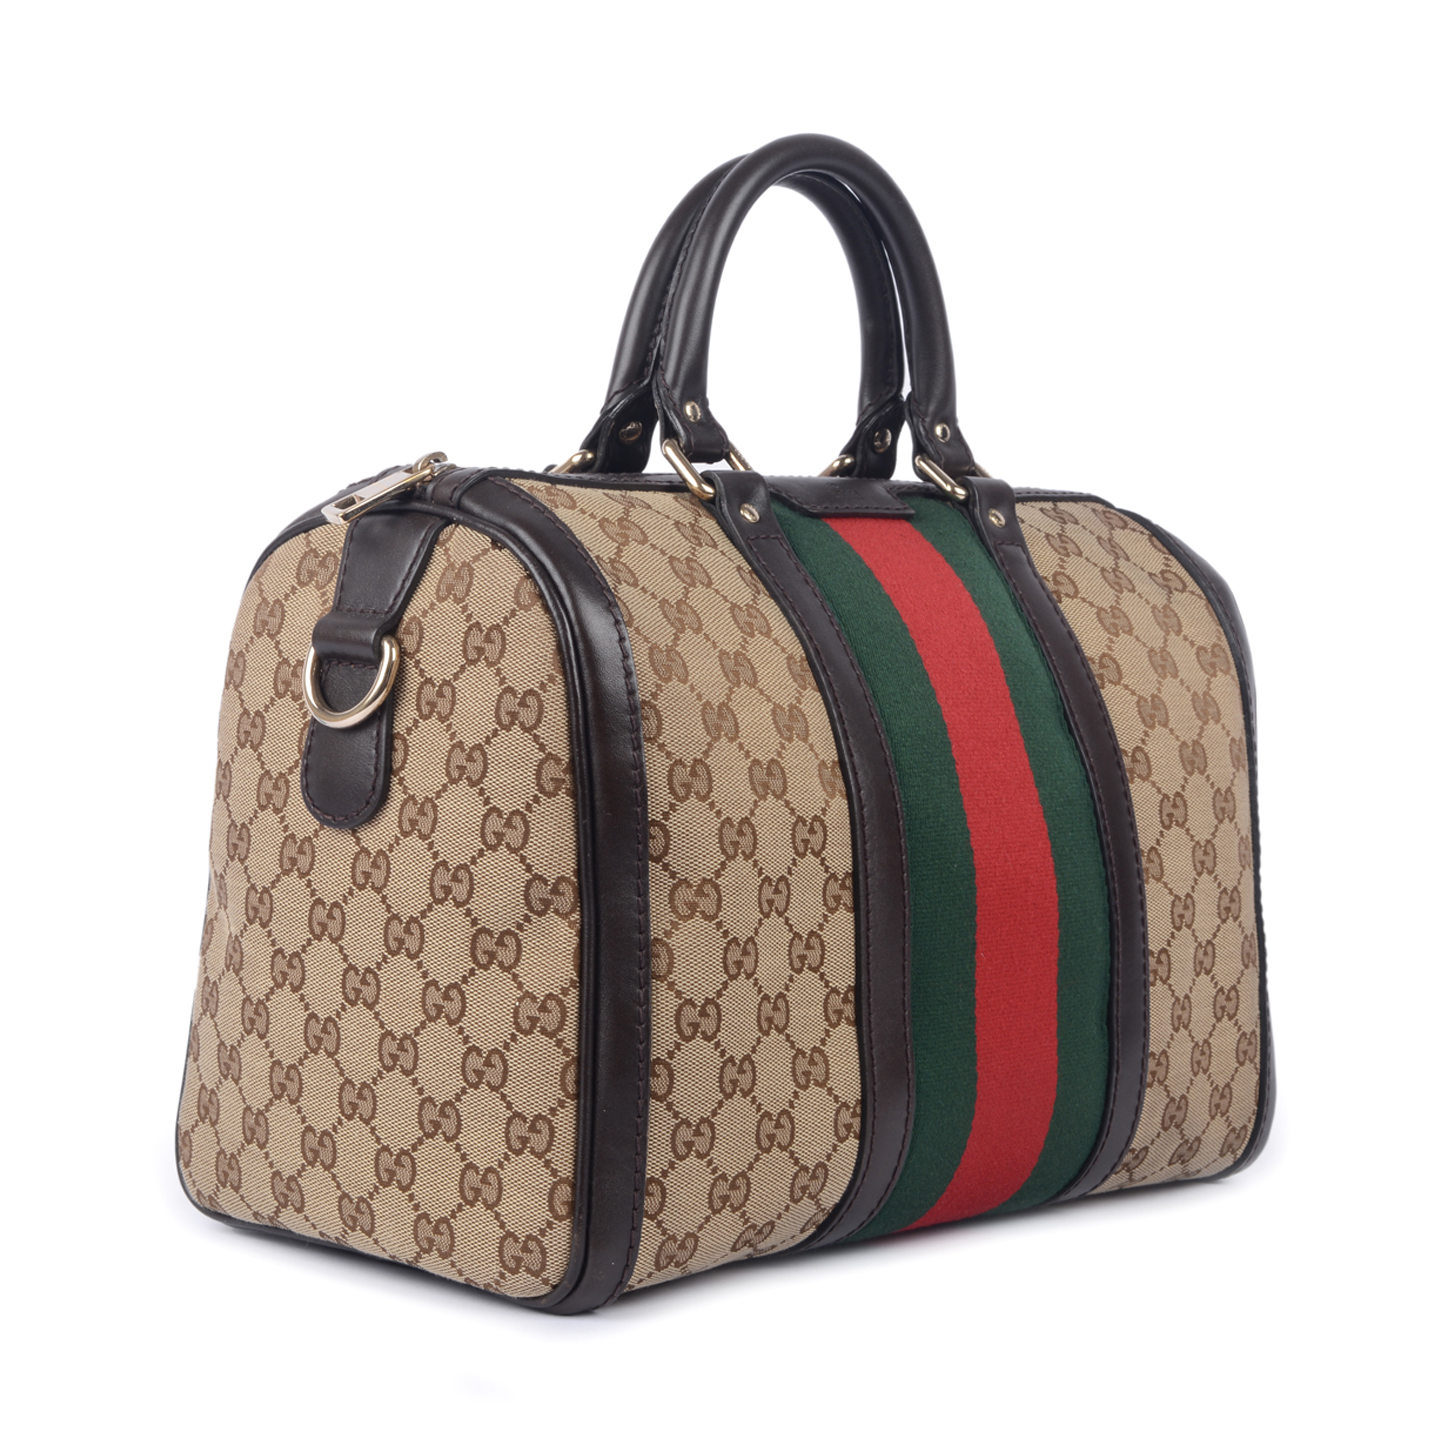 Original Gucci Bags Price In India | IQS Executive